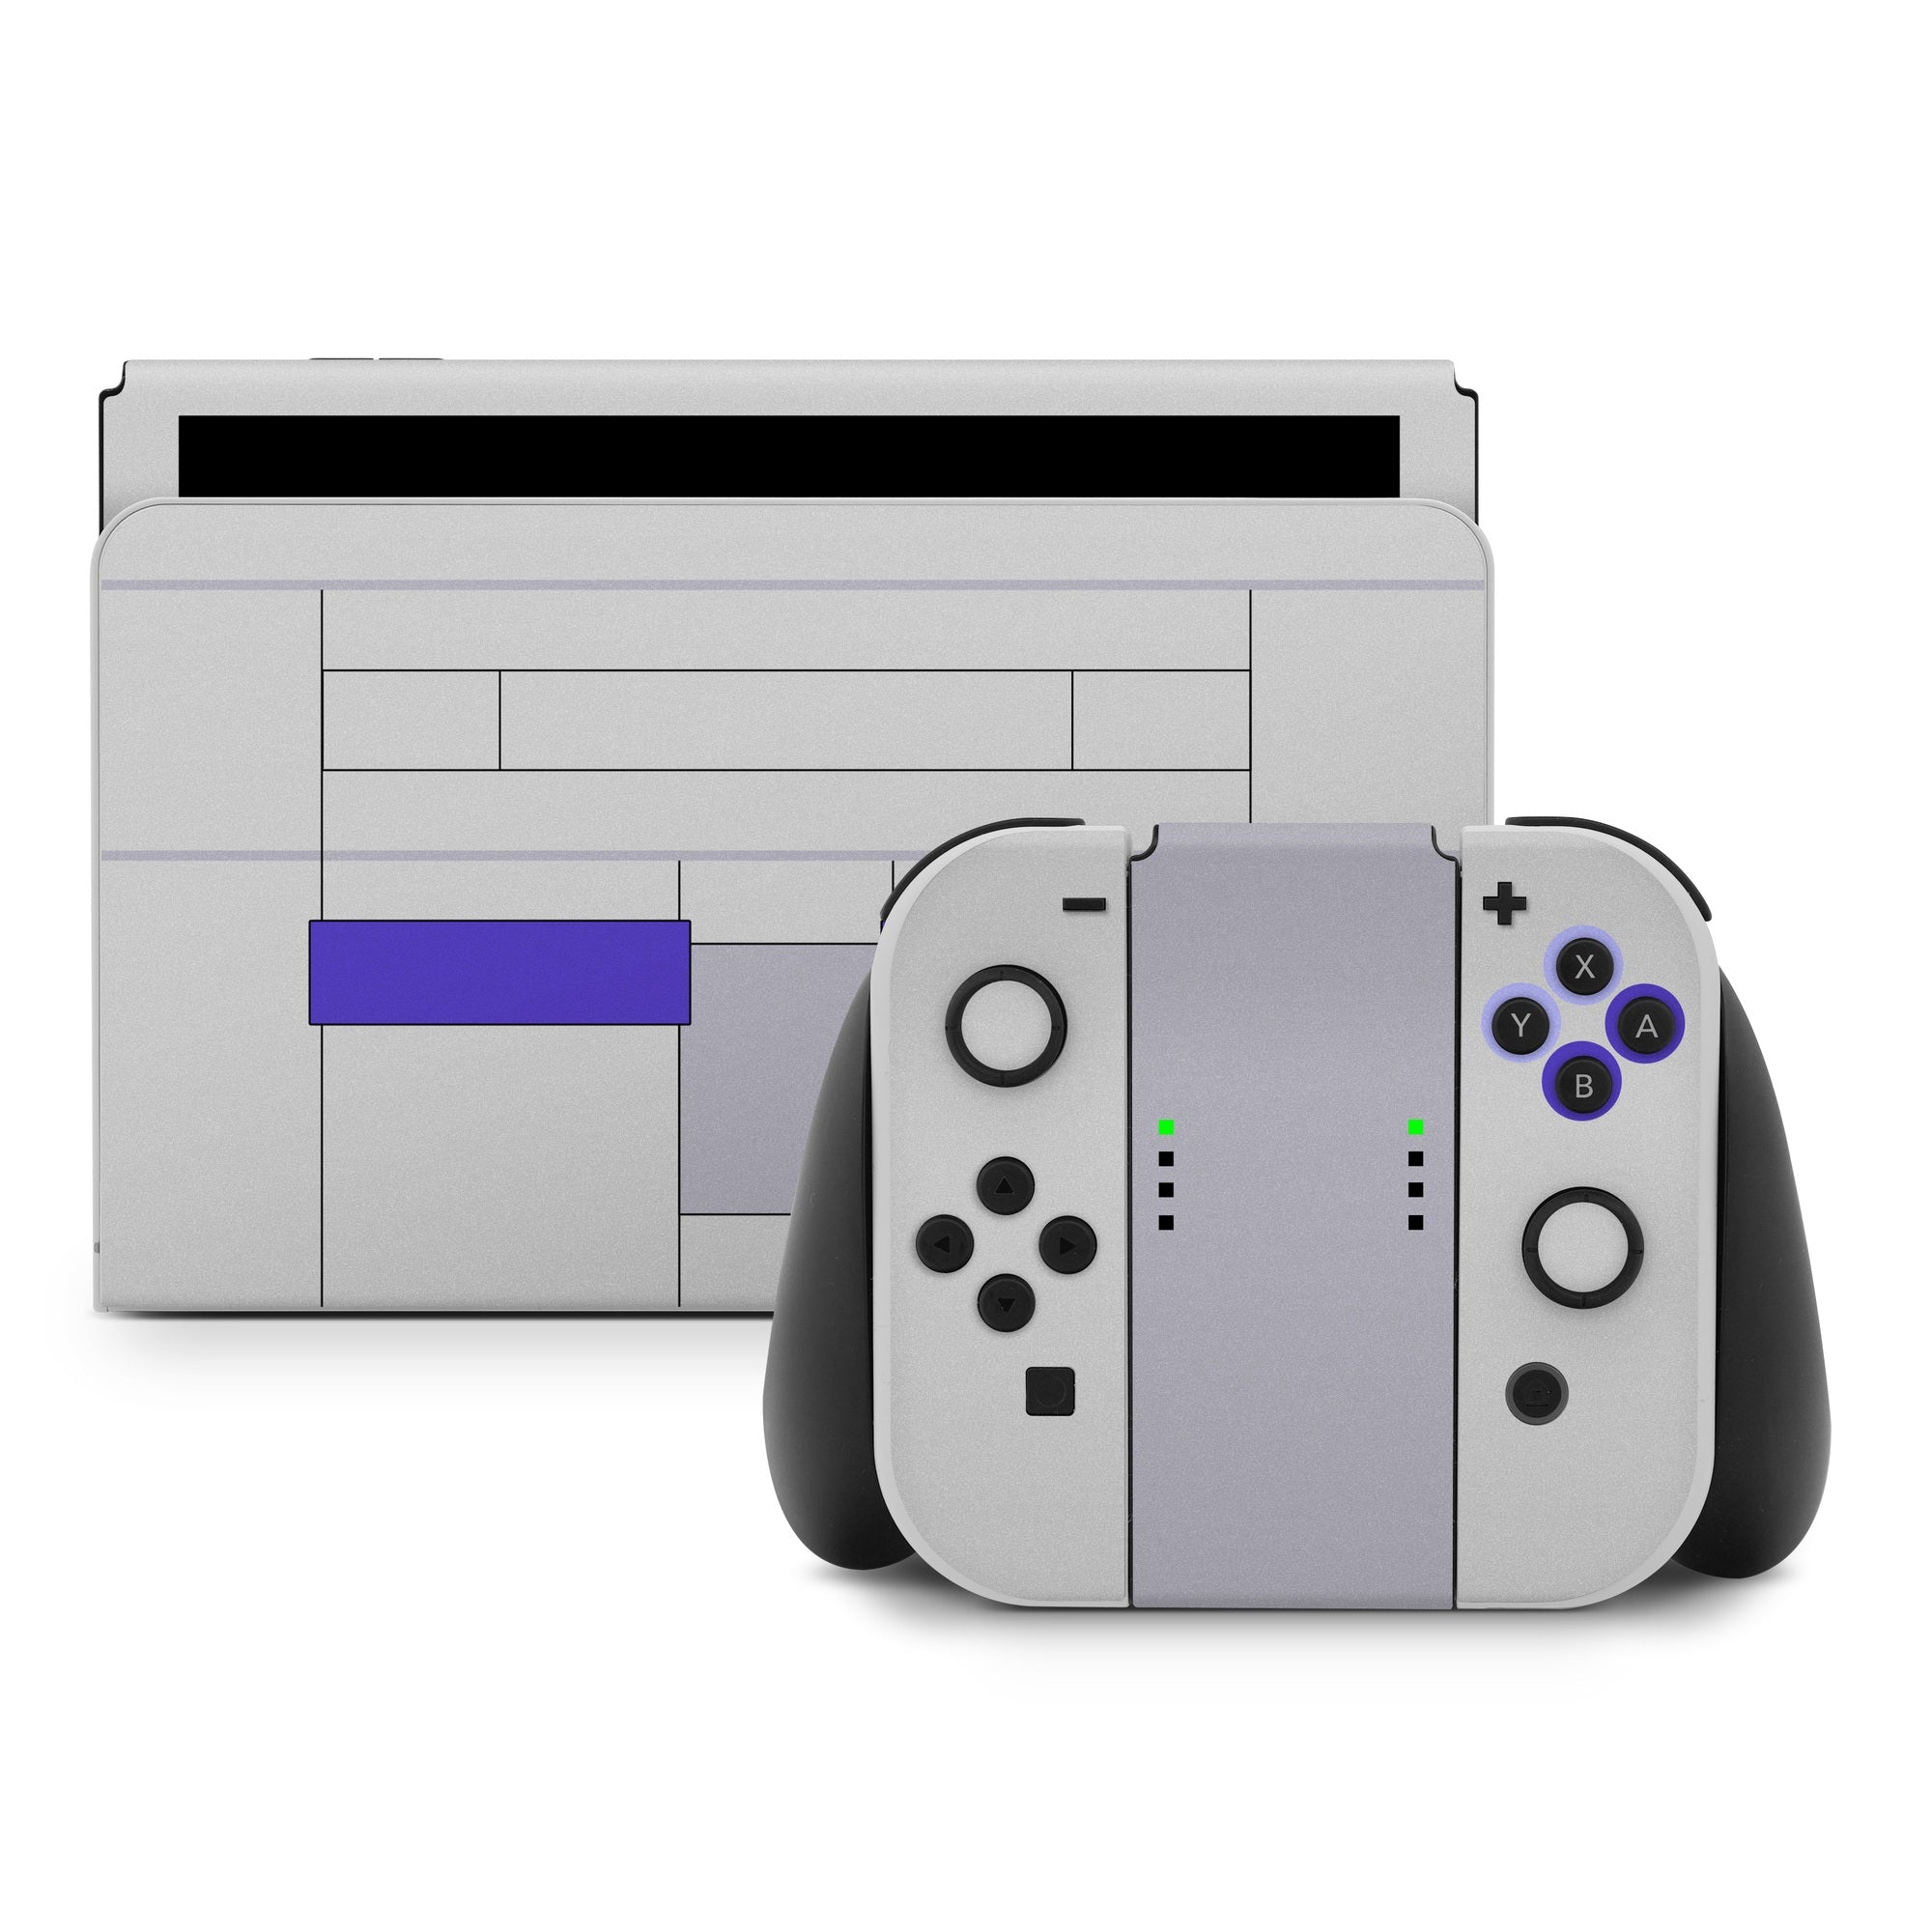 SNES - Nintendo Switch Skin